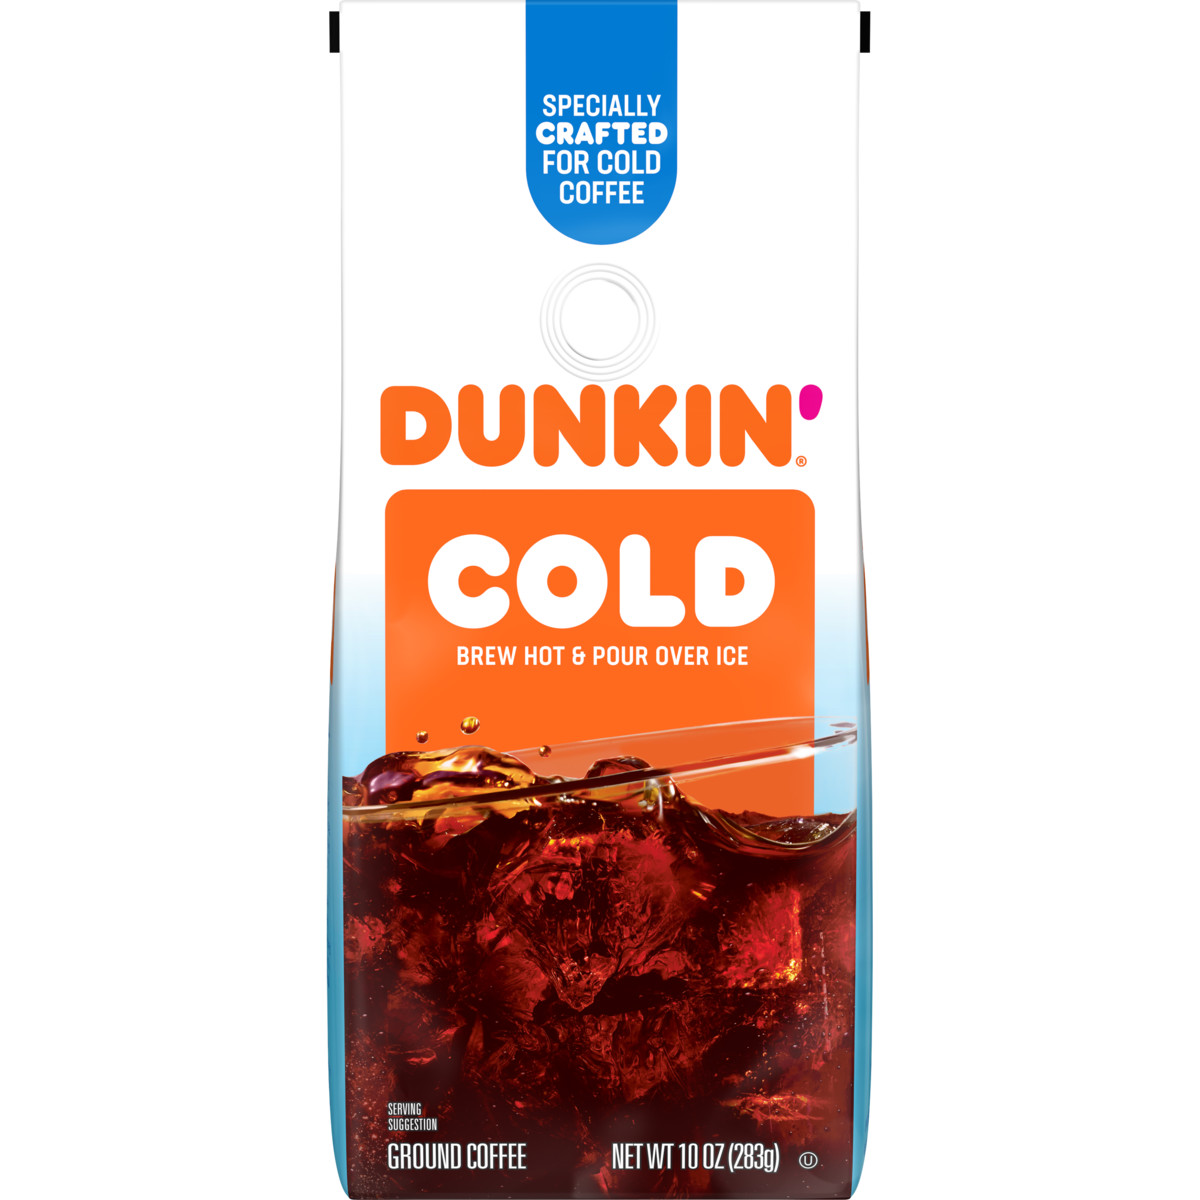 Dunkin’ Cold Coffee